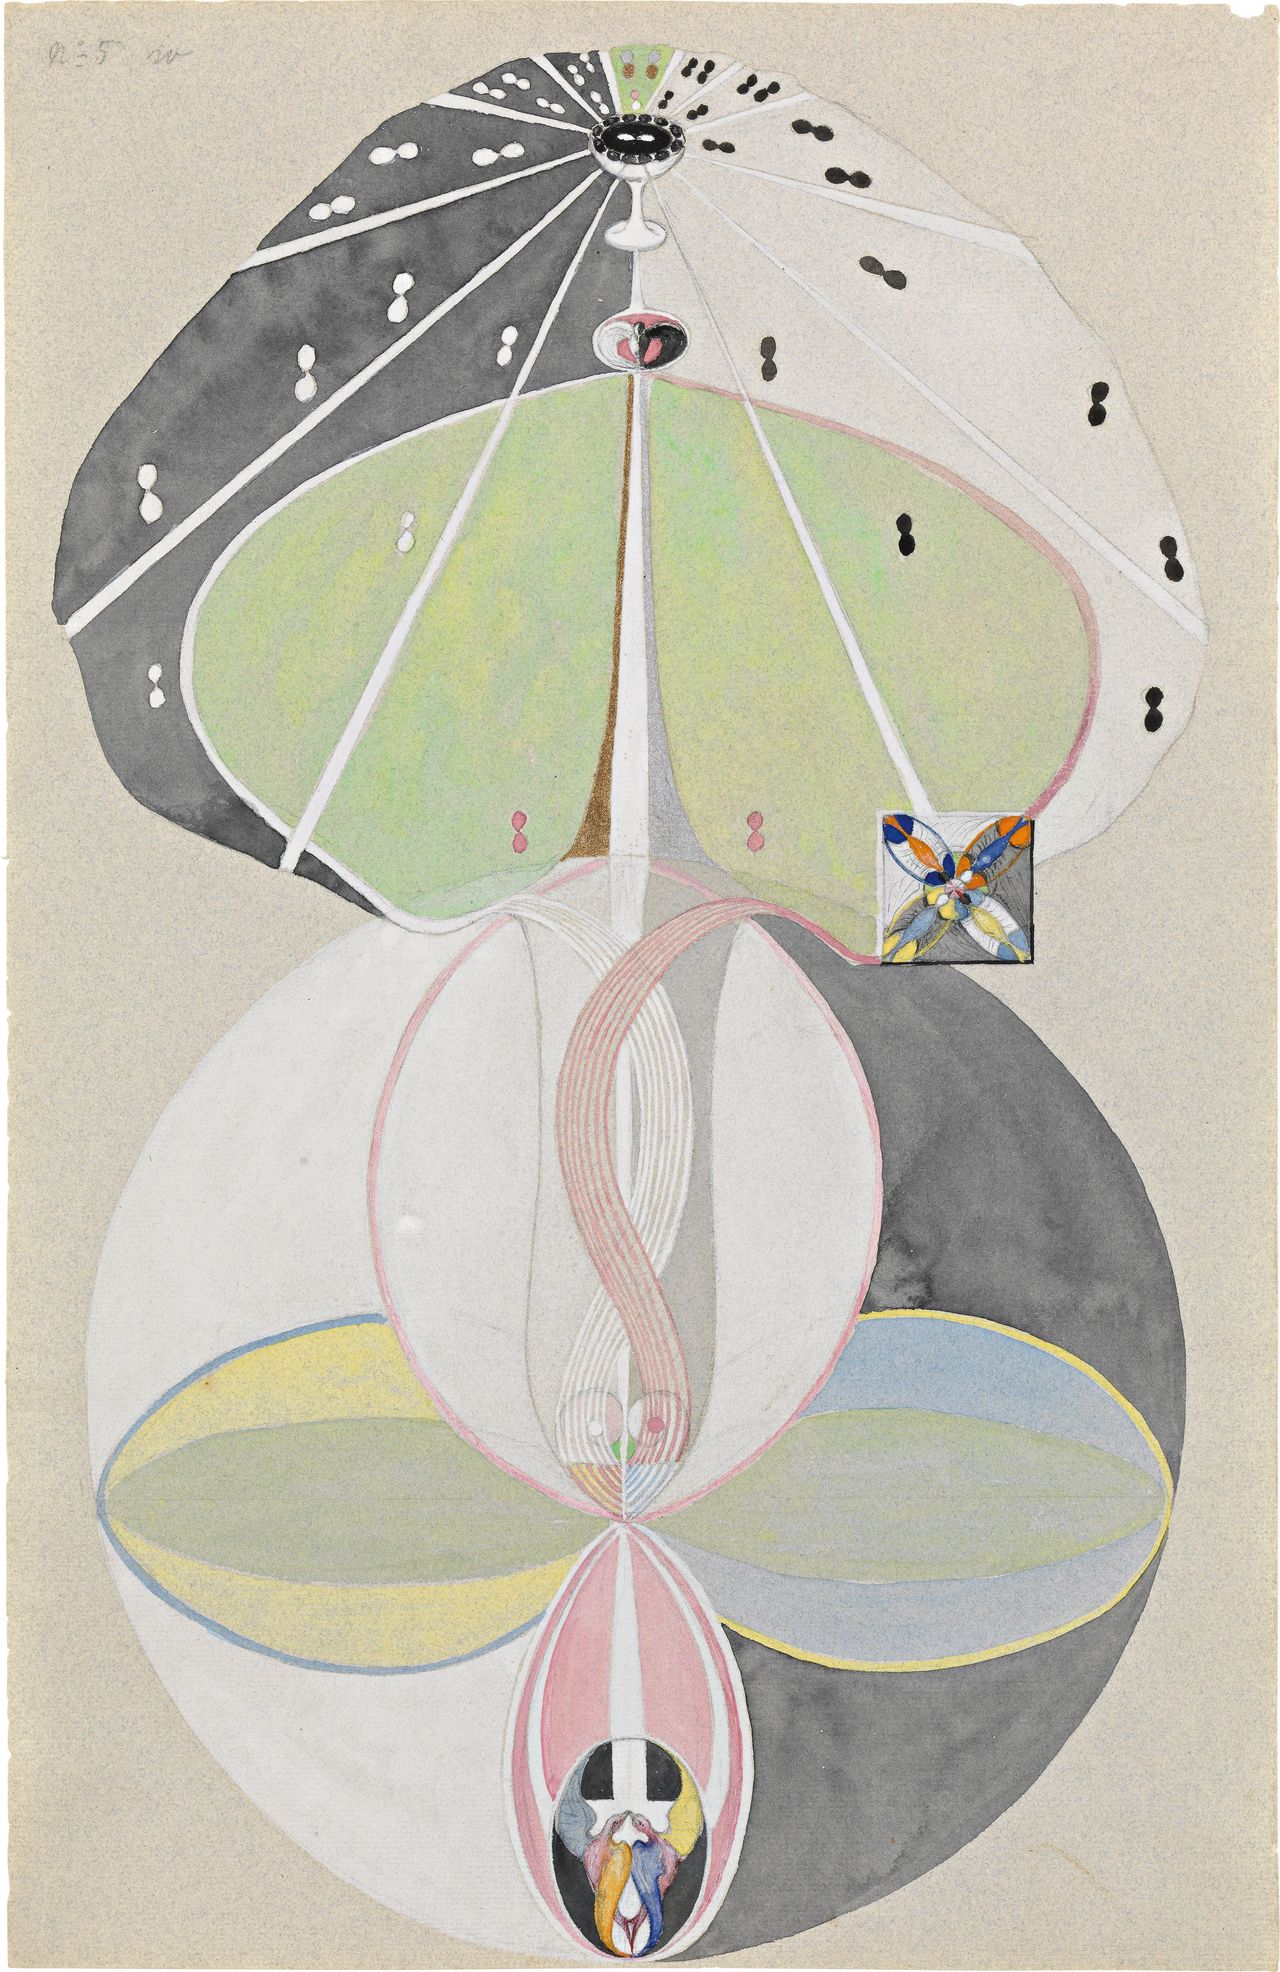 Hilma af Klint's "Tree of Knowledge, No. 5 (Kunskapens träd, nr 5)," 1915.